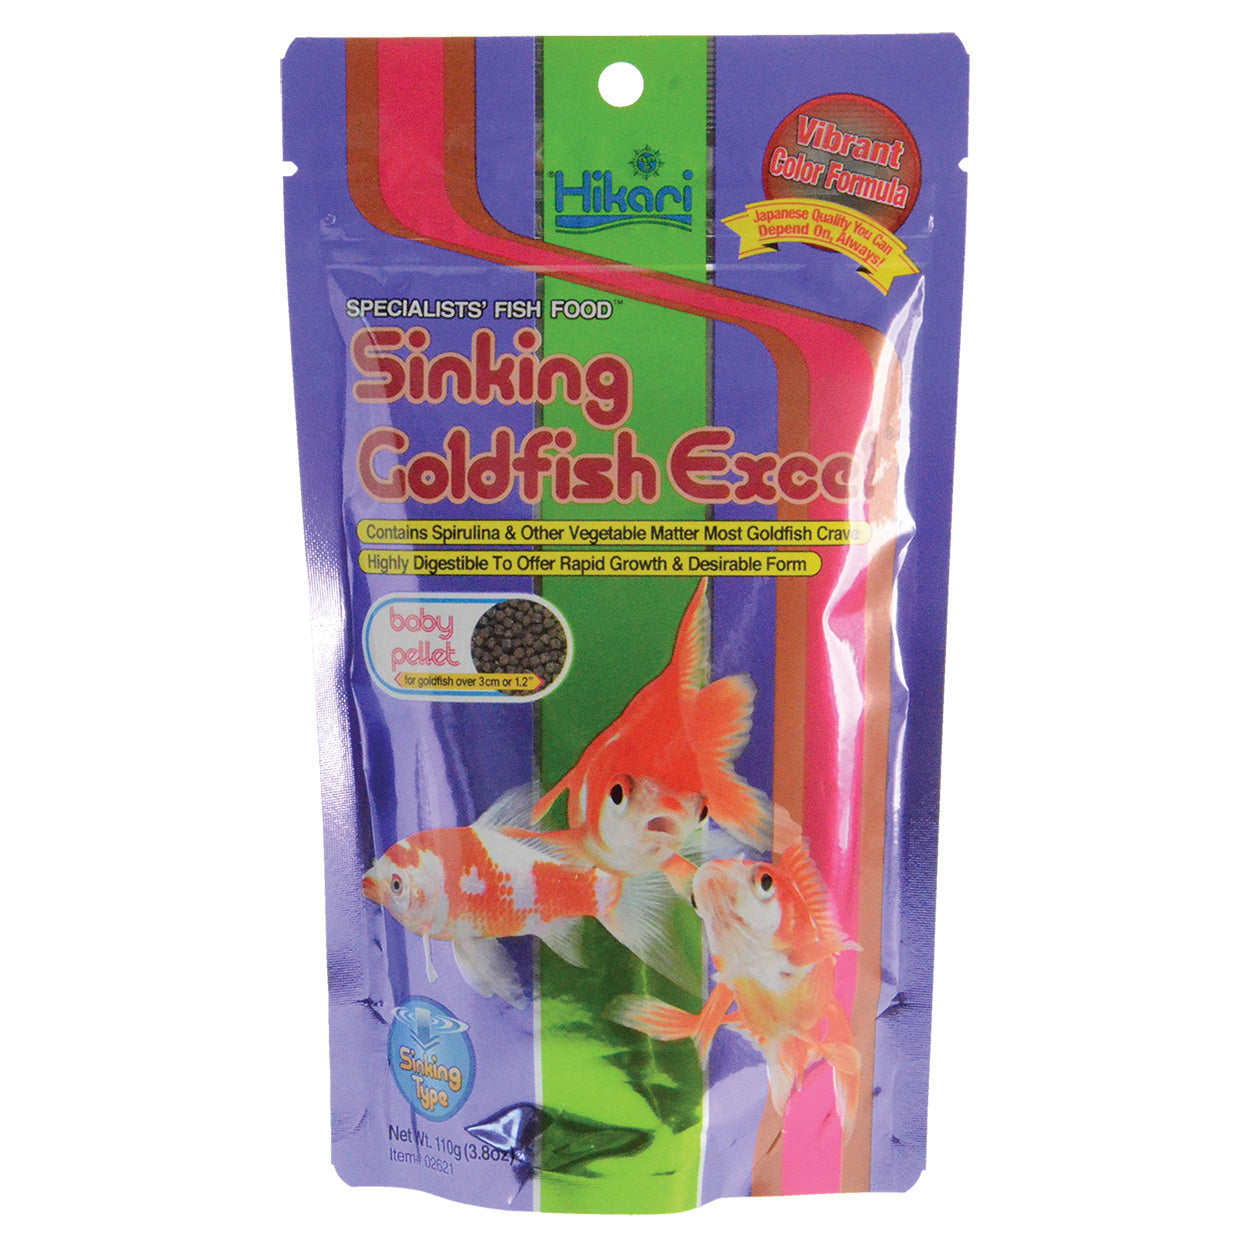 Hikari Sinking Goldfish Excel baby pellet 110 gr